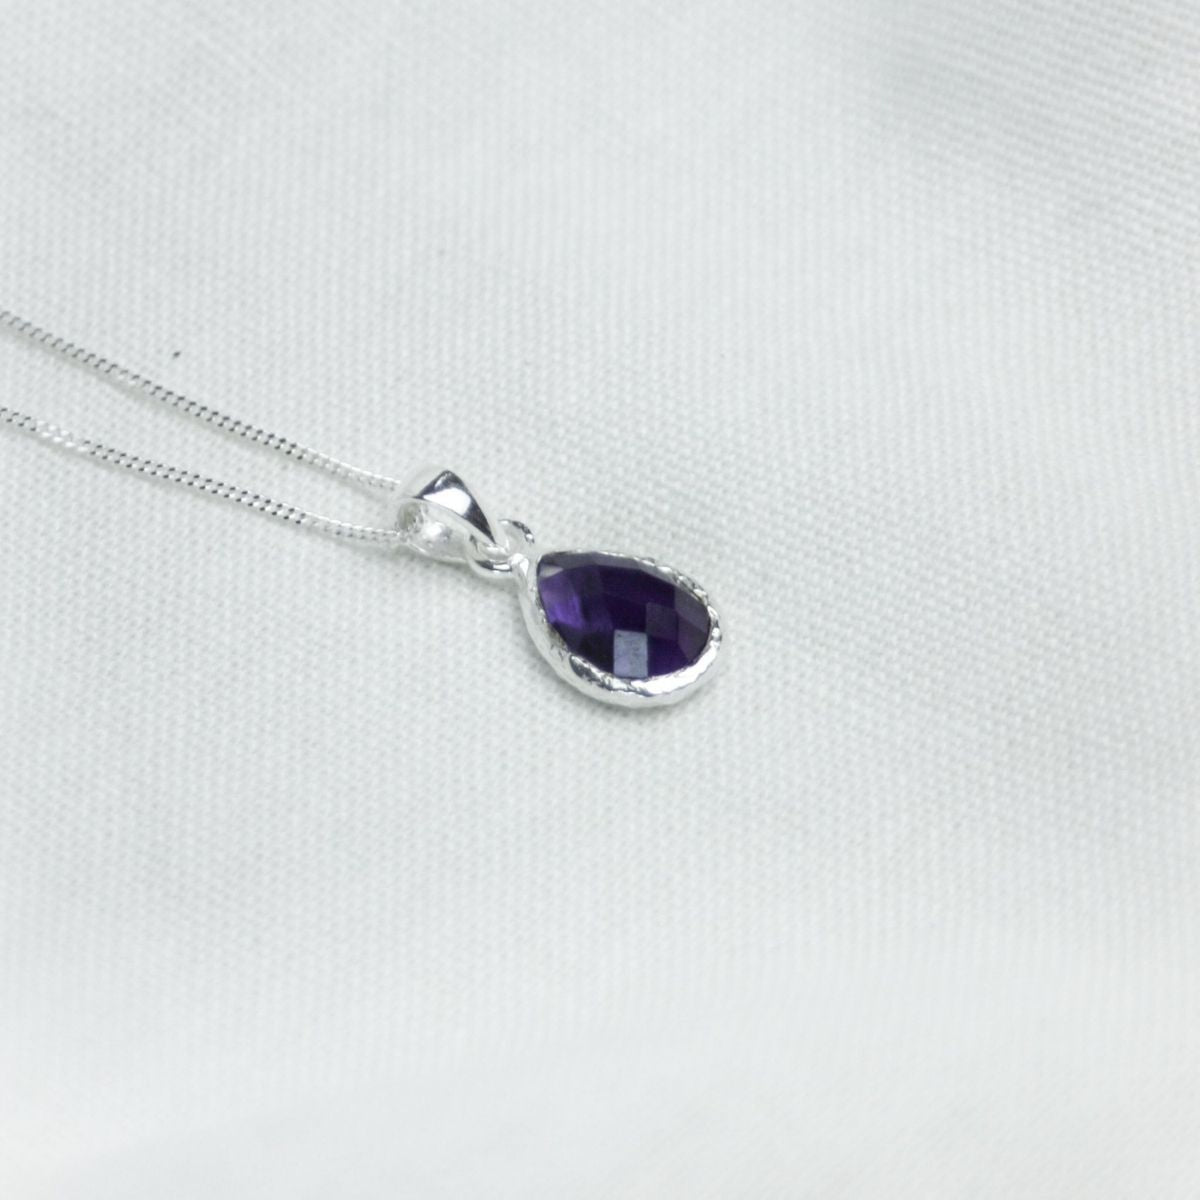 a purple pendant necklace on a white cloth